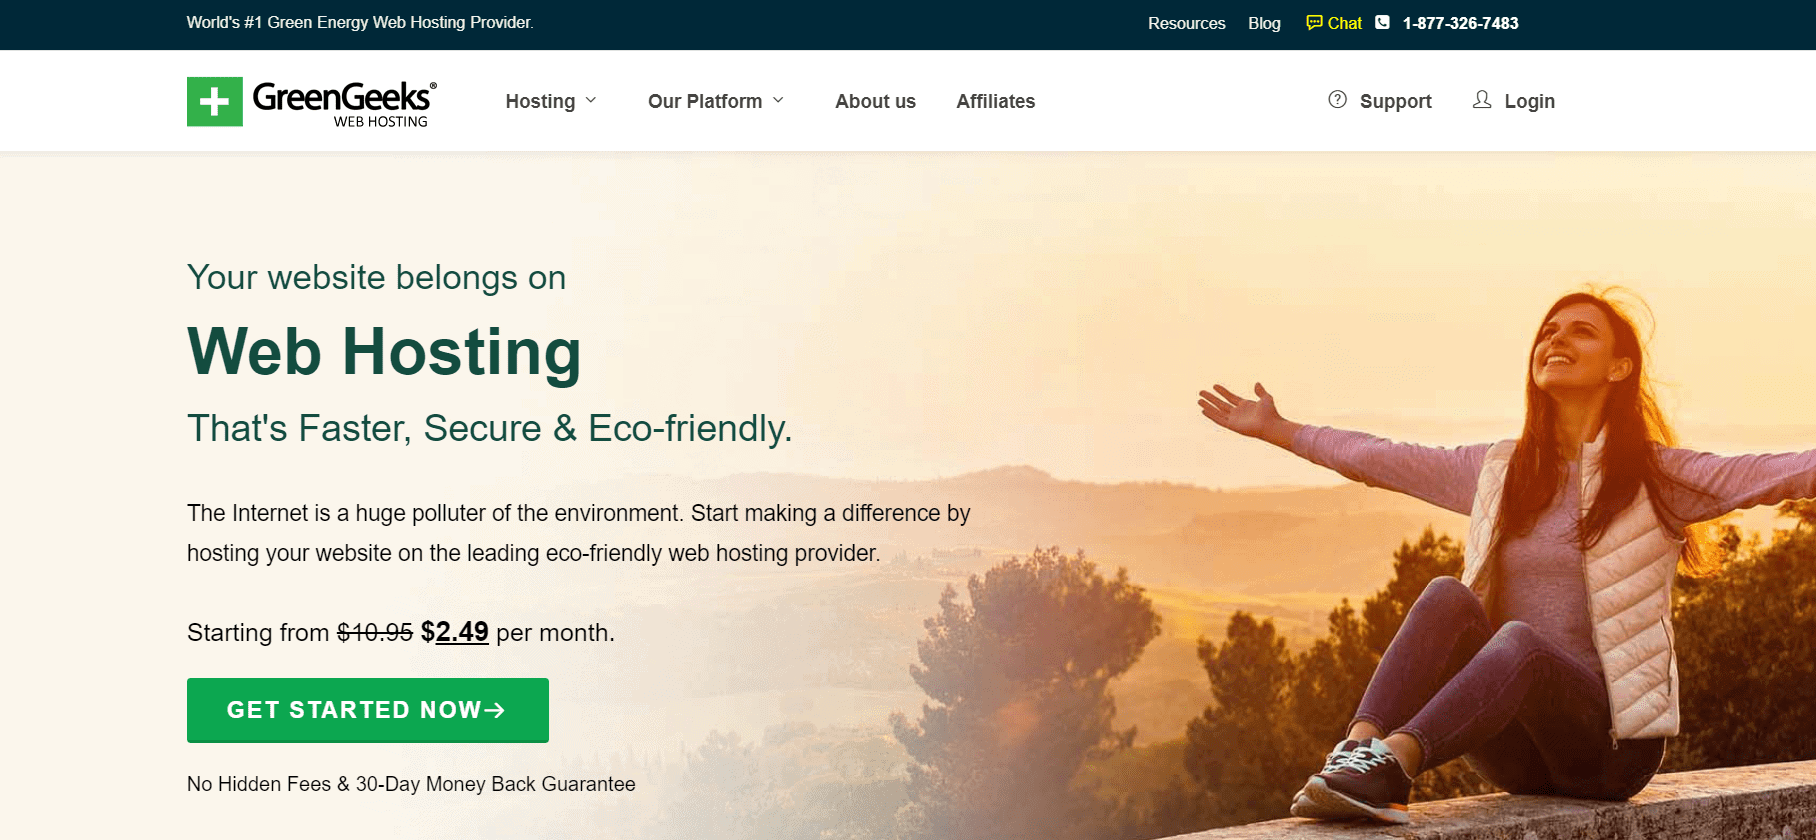 GreenGeeks web hosting